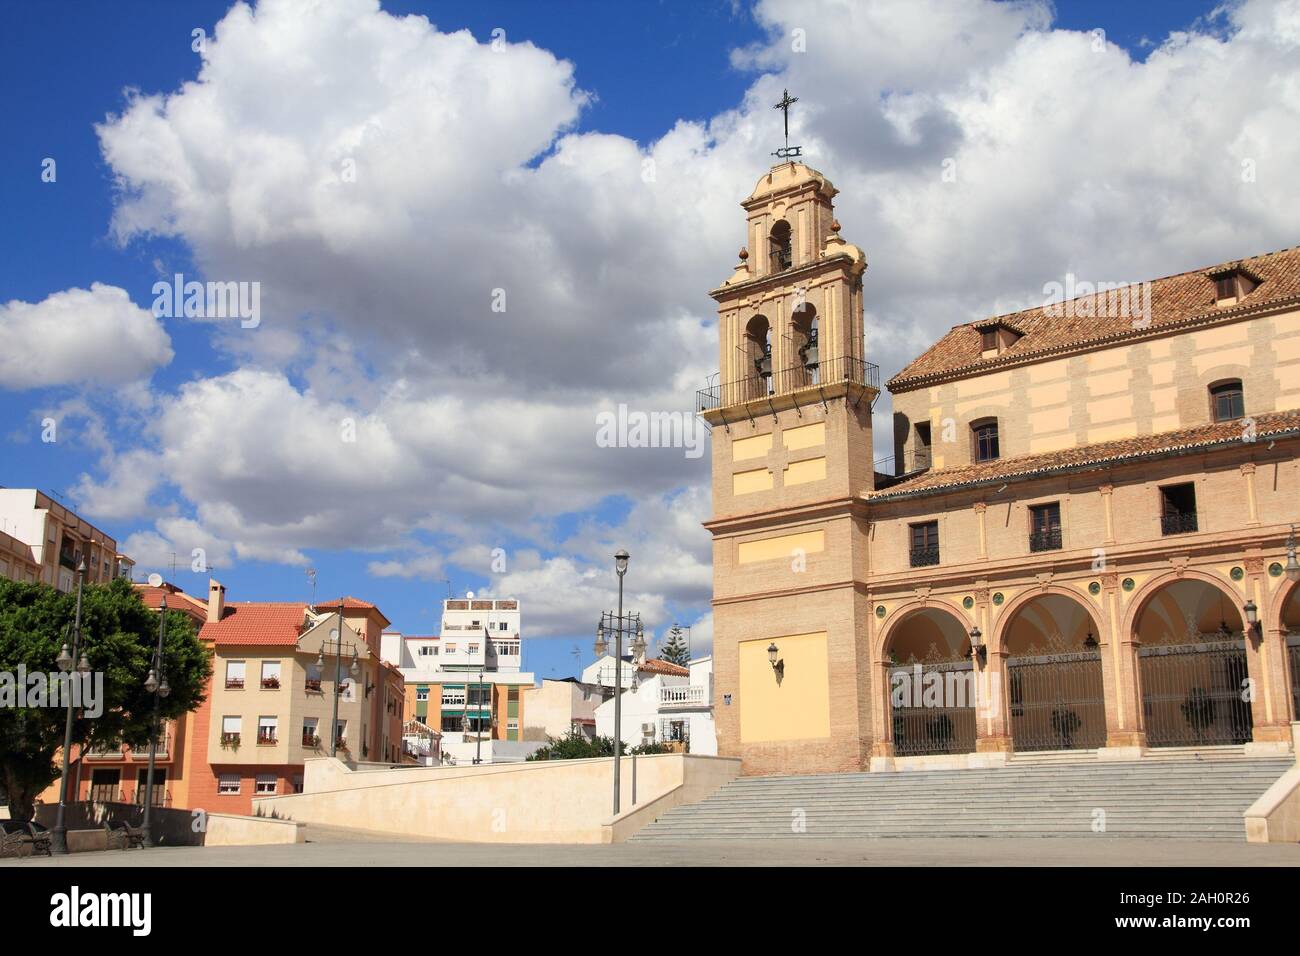 Malaga in Andalusia, Spain. Santuario square - old religious landmark. Stock Photo